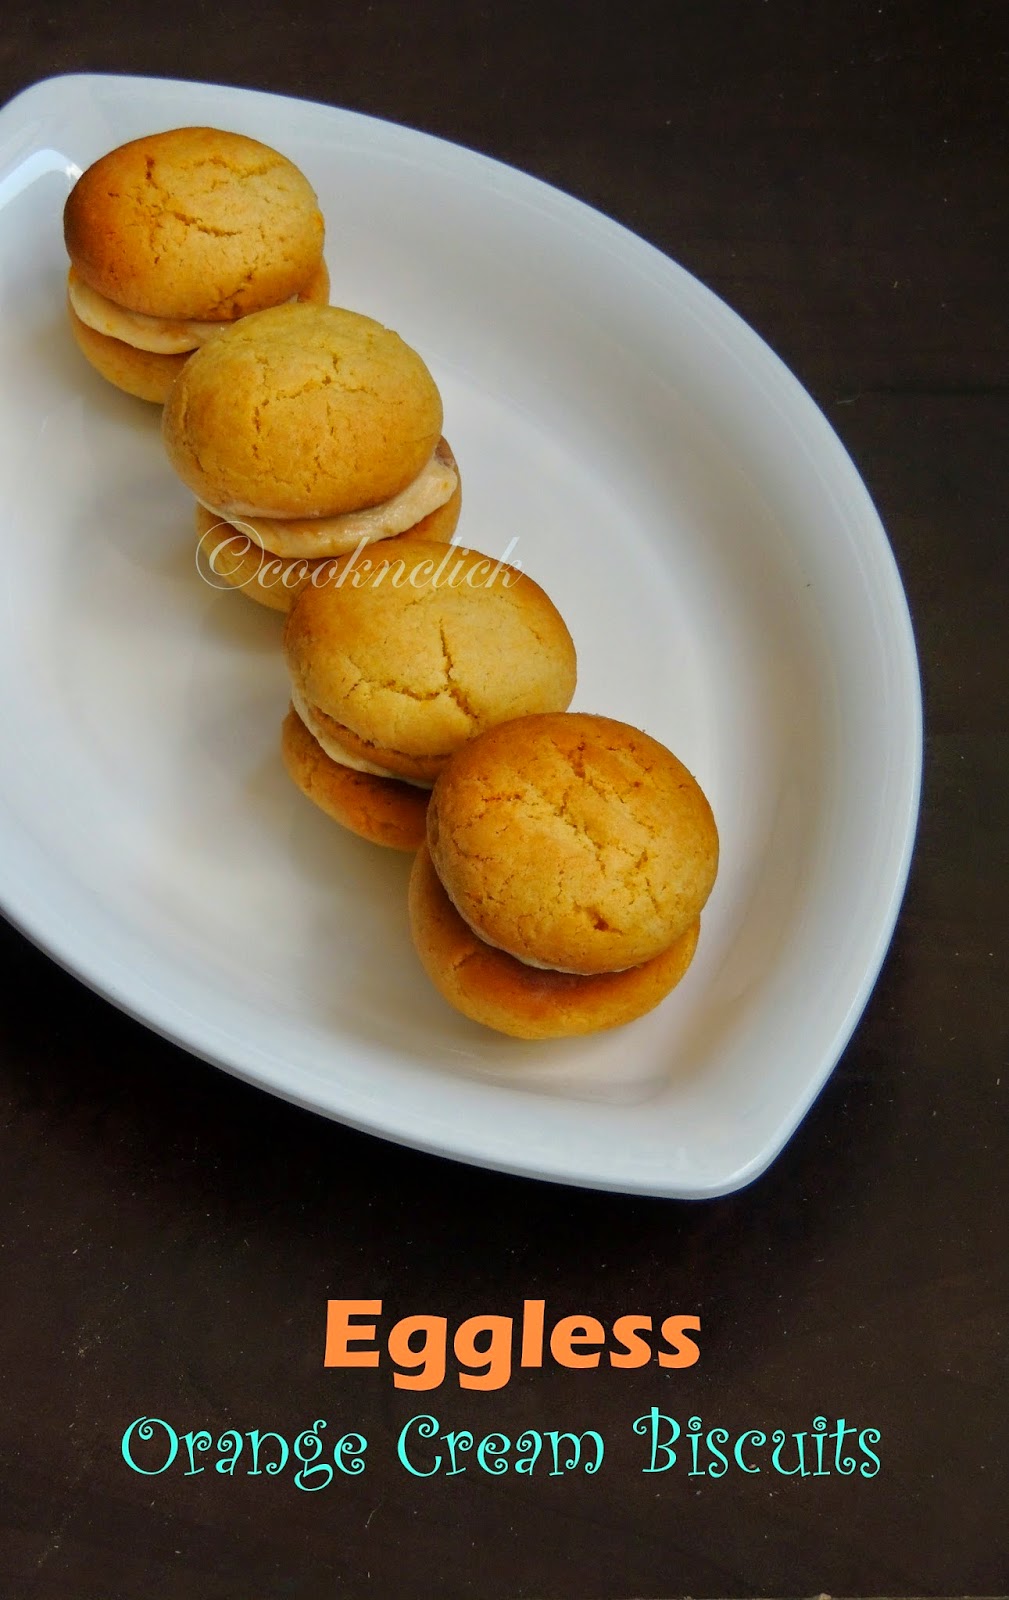 Biscuits with orange cream, Eggless orange cream biscuits